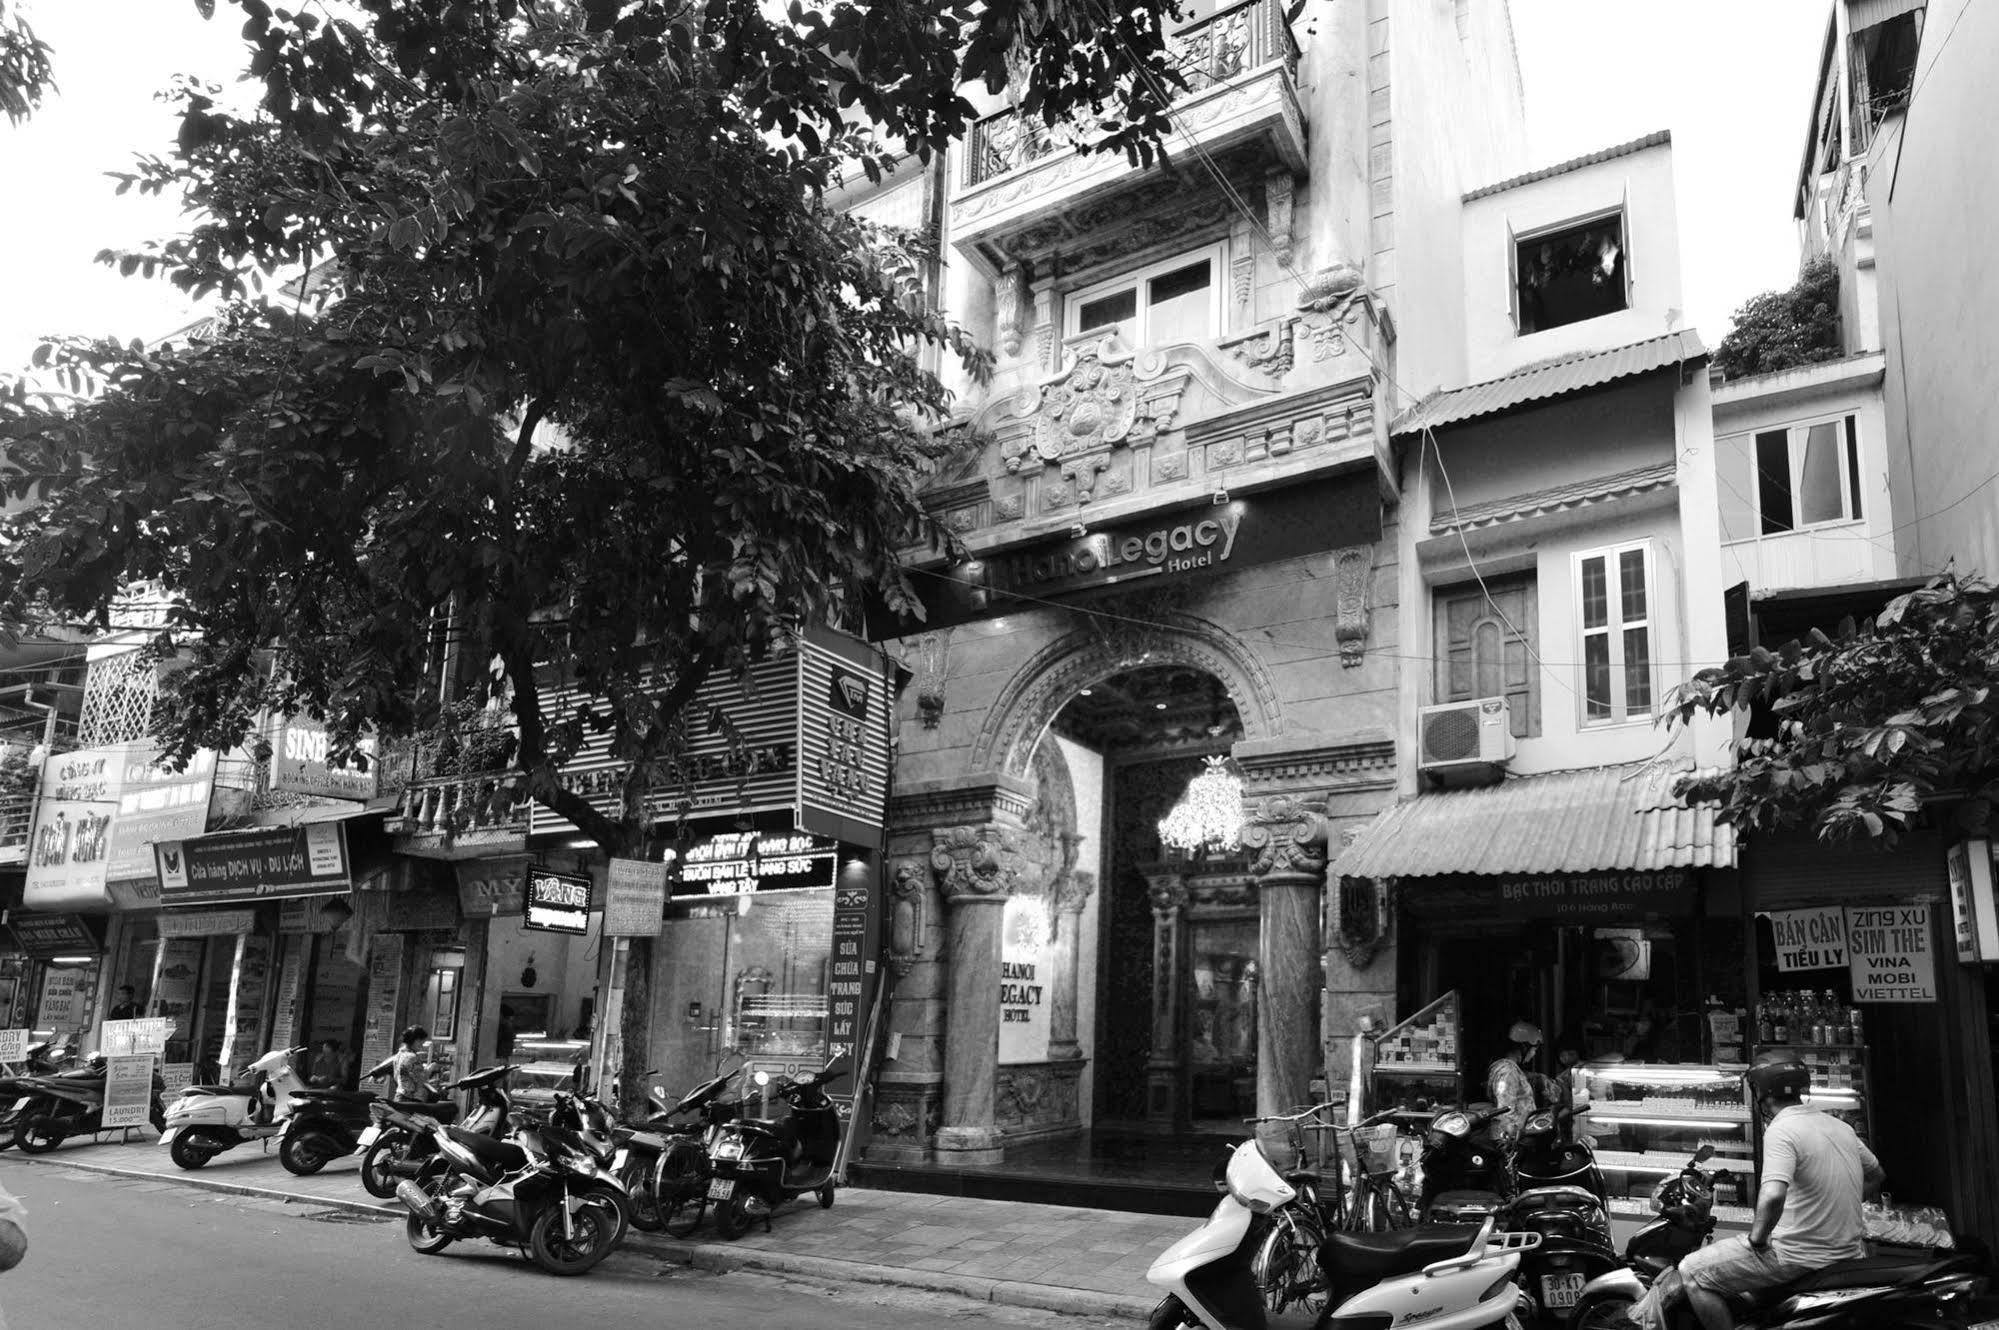 Hanoi Legacy Hotel - Hang Bac 외부 사진